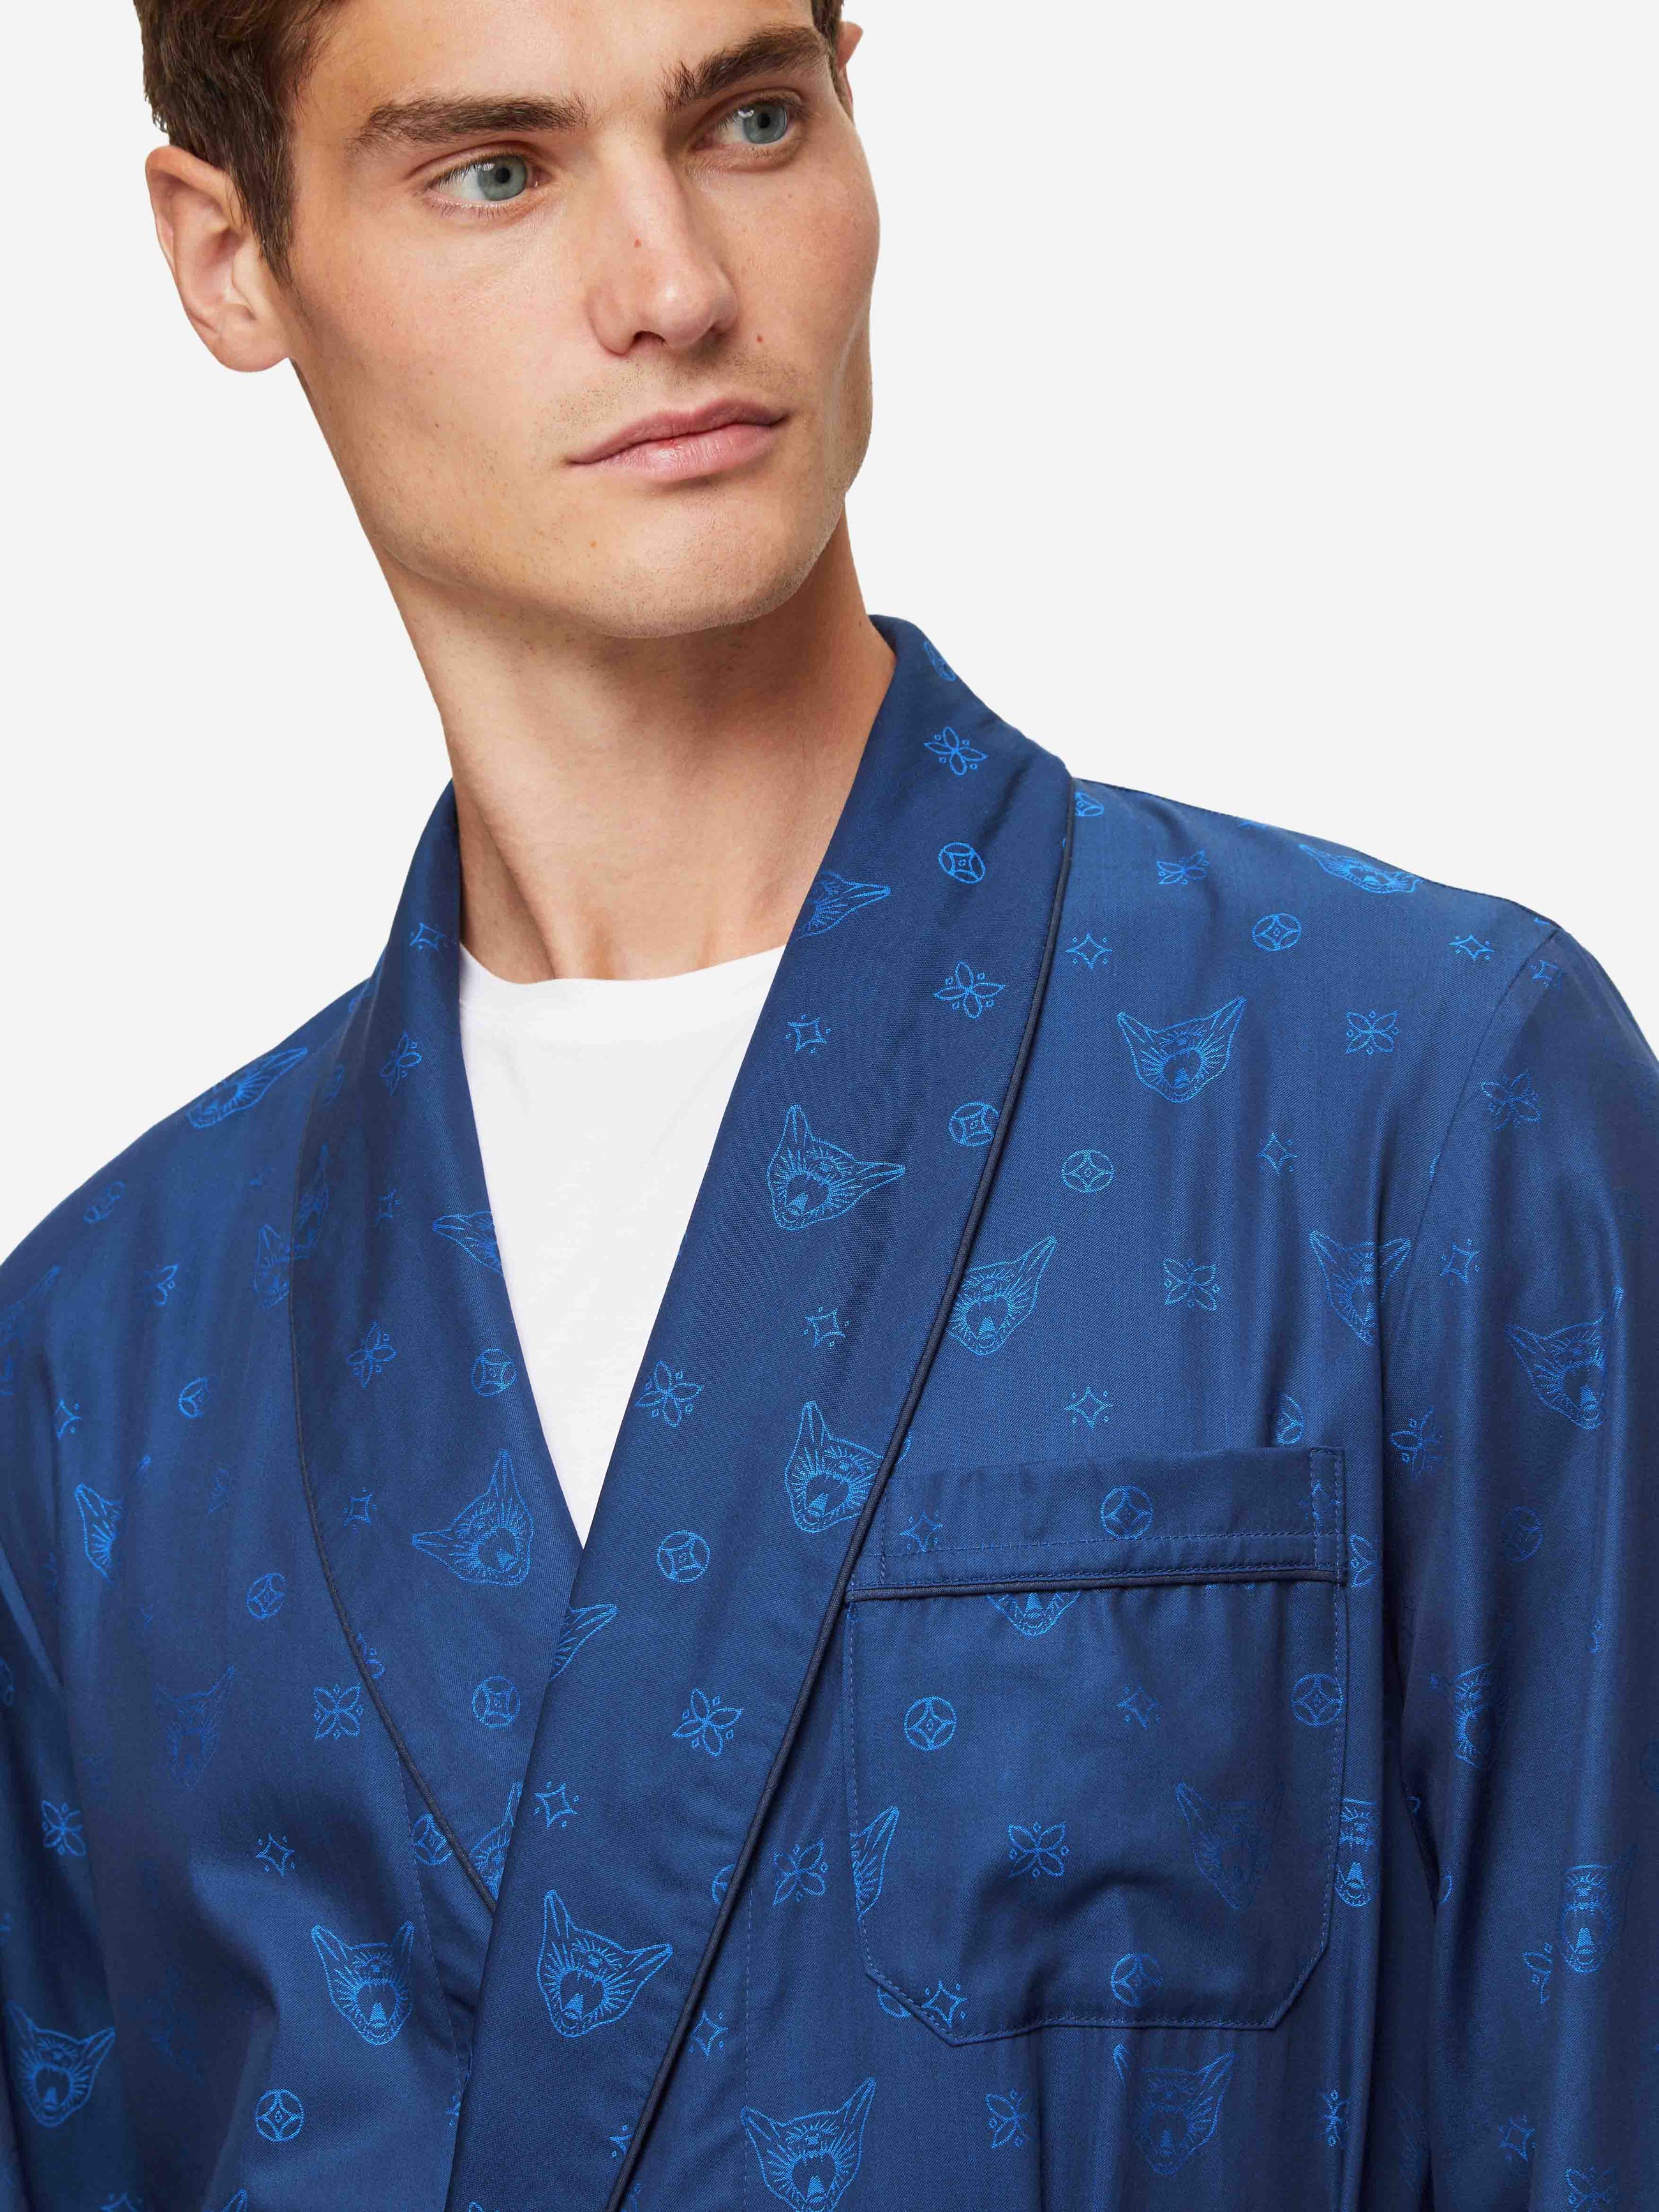 Buy Haseil Men's Satin Kimono Robe Spring Summer Shawl Collar Sleepwear  Classic Silk Bathrobes, Black,TagsizeXL=USsizeS/M Online at Low Prices in  India - Amazon.in